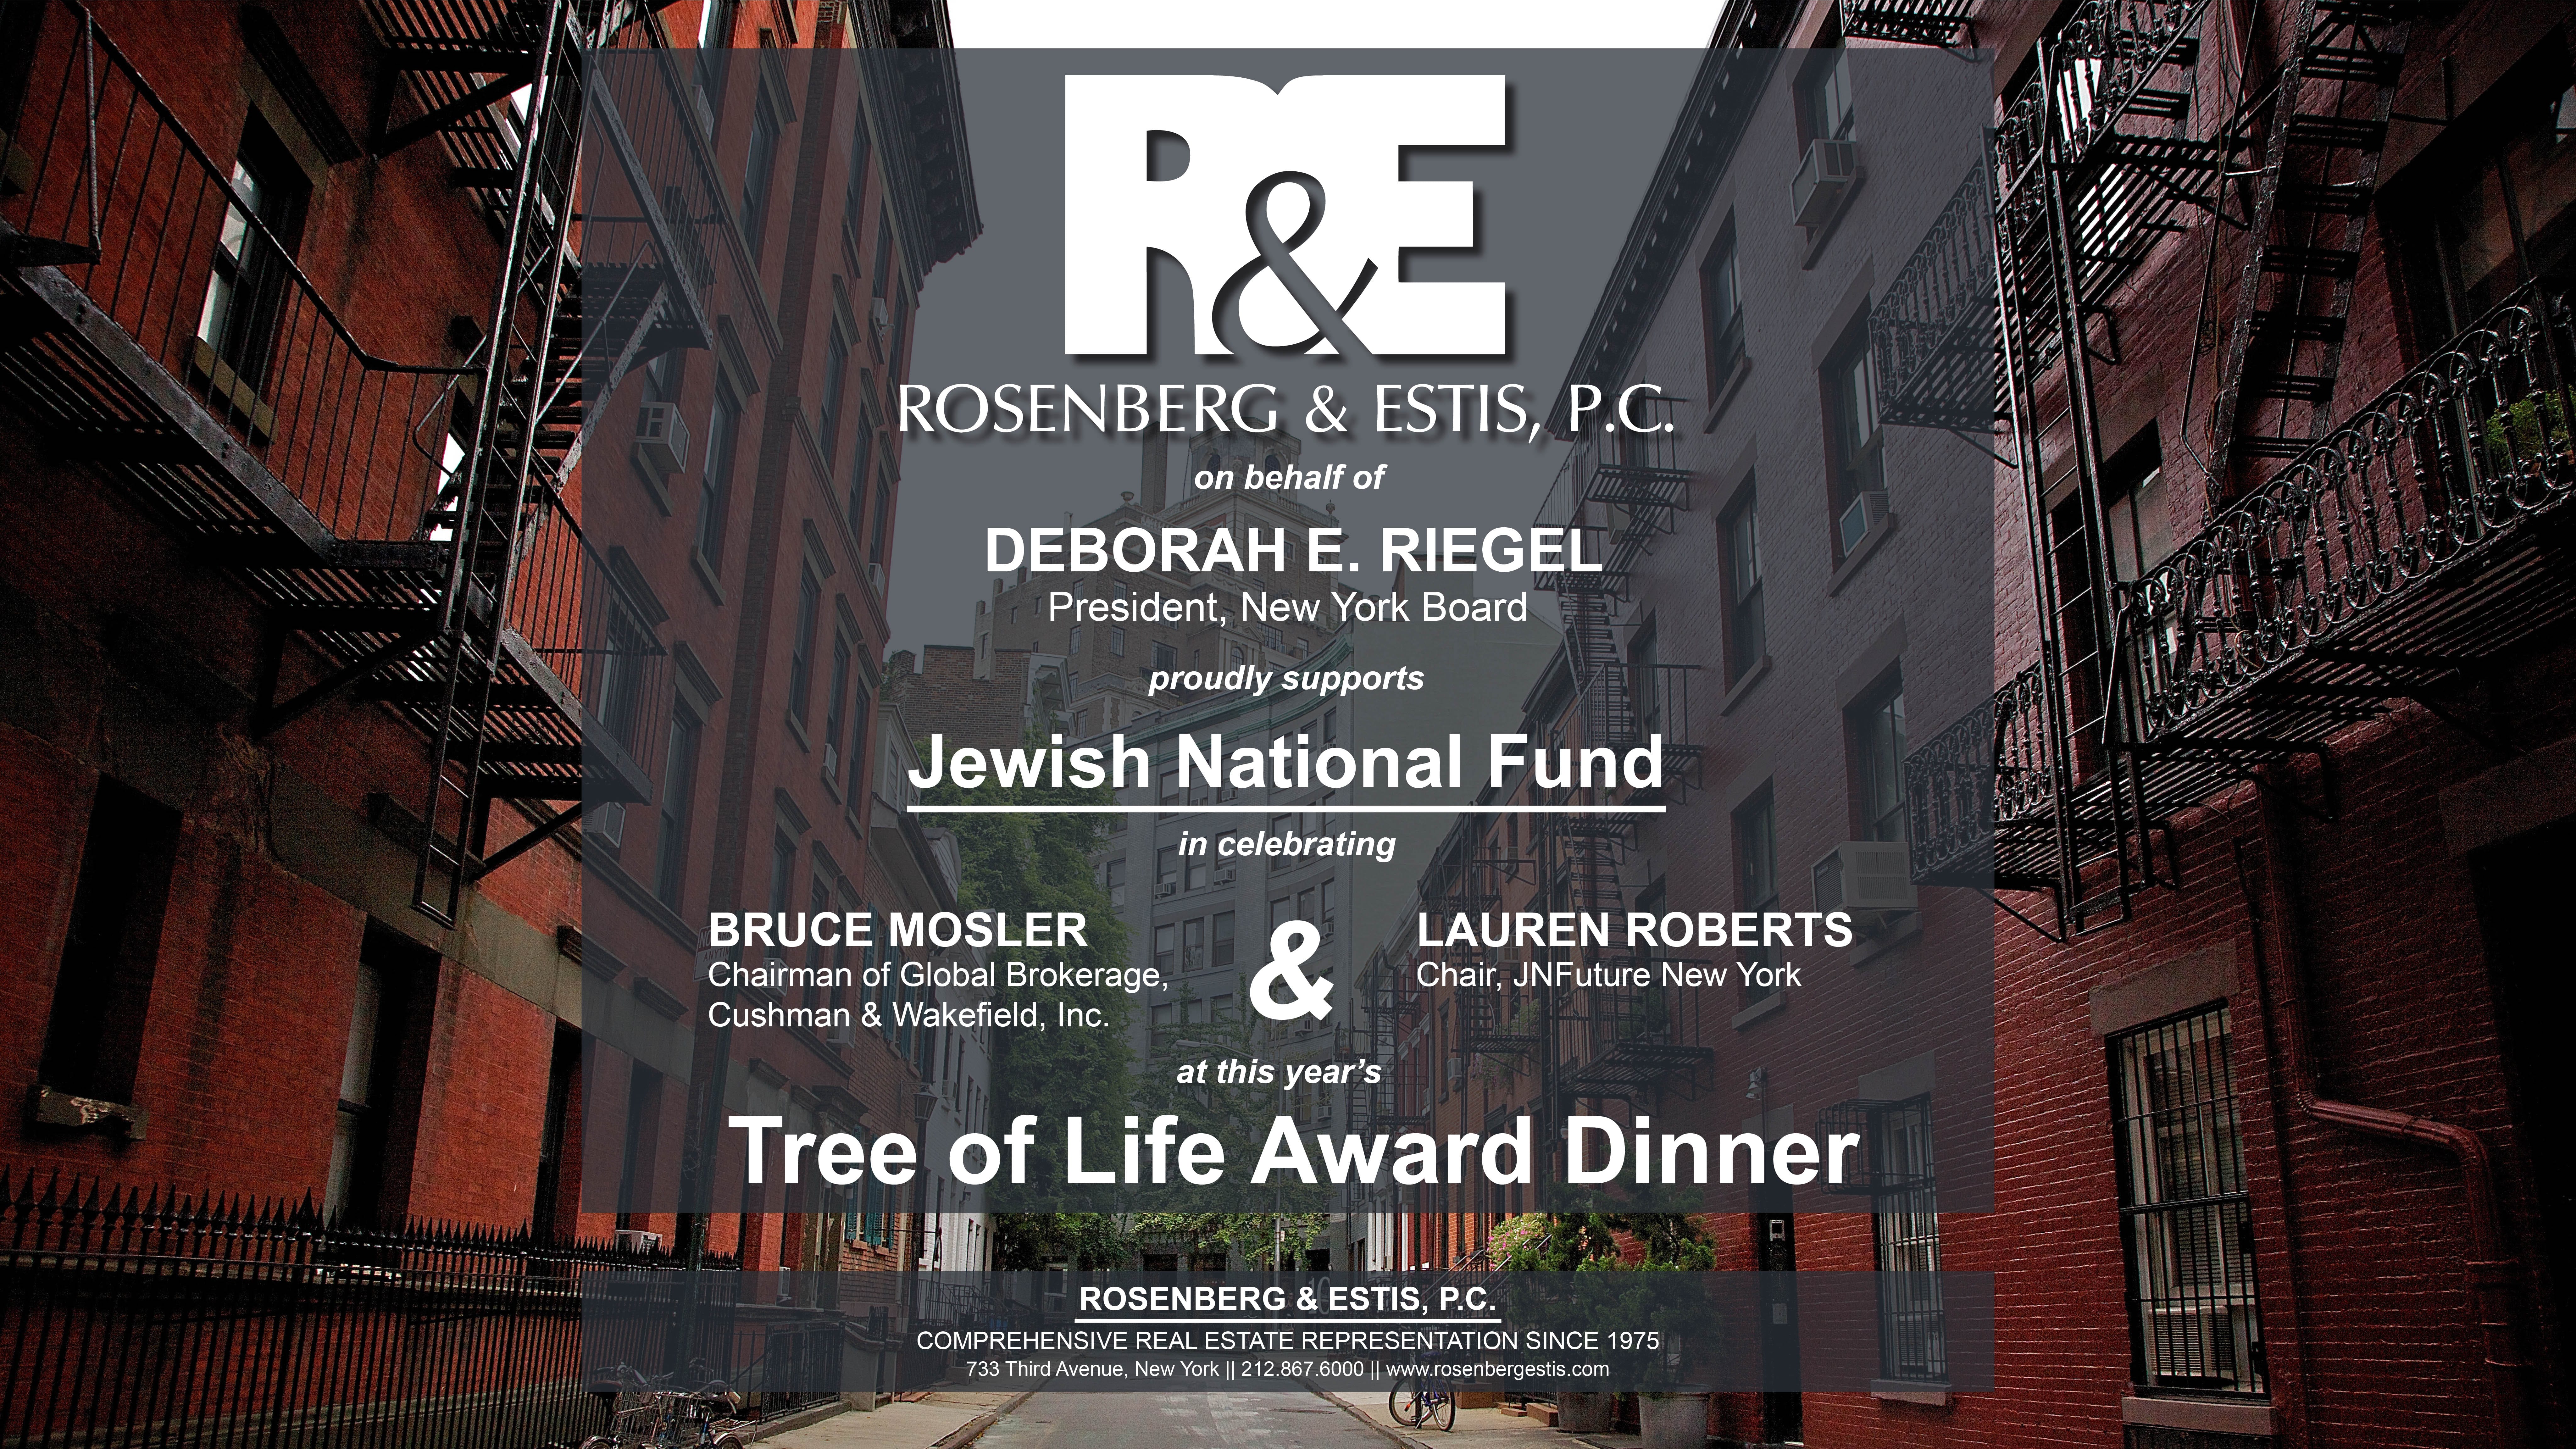 Rosenberg & Estis, P.C. on behalf of Deborah E. Riegel President, New York Board proudly supports Jewsih National Fund